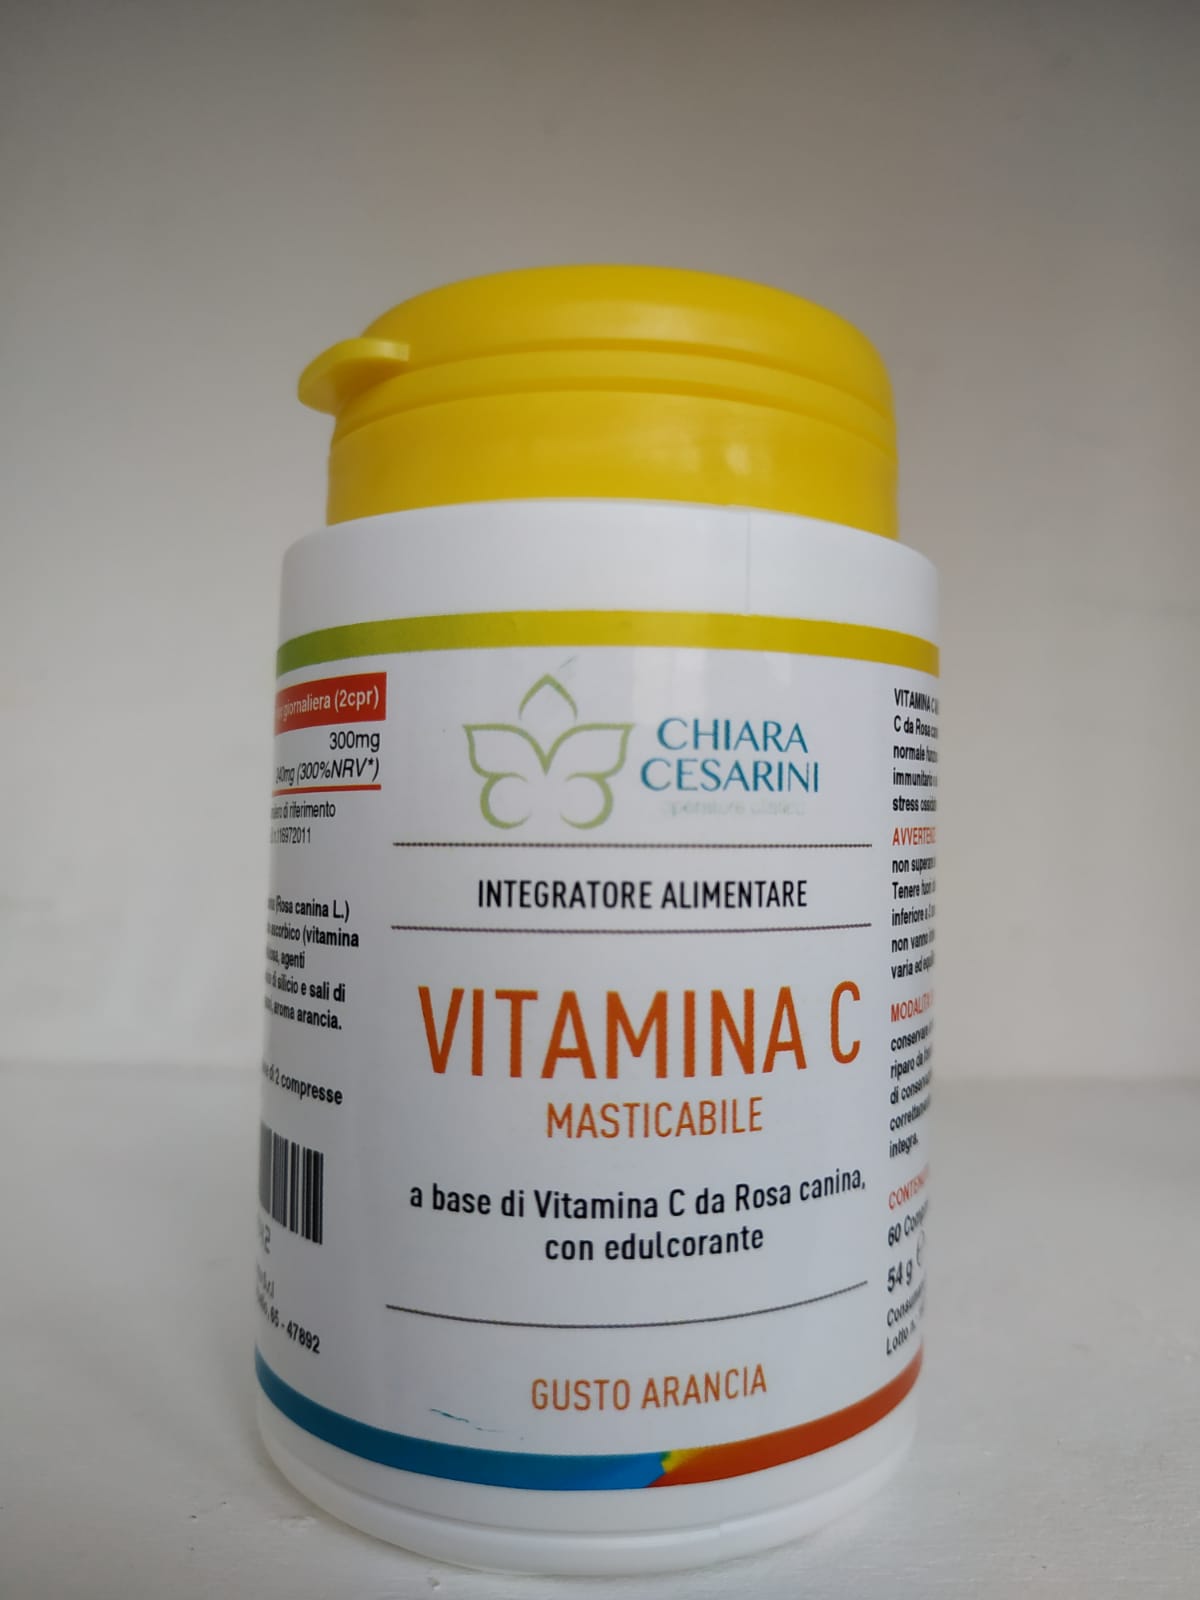 VITAMINA C masticabile - 60 Compresse masticabile da 900 mg